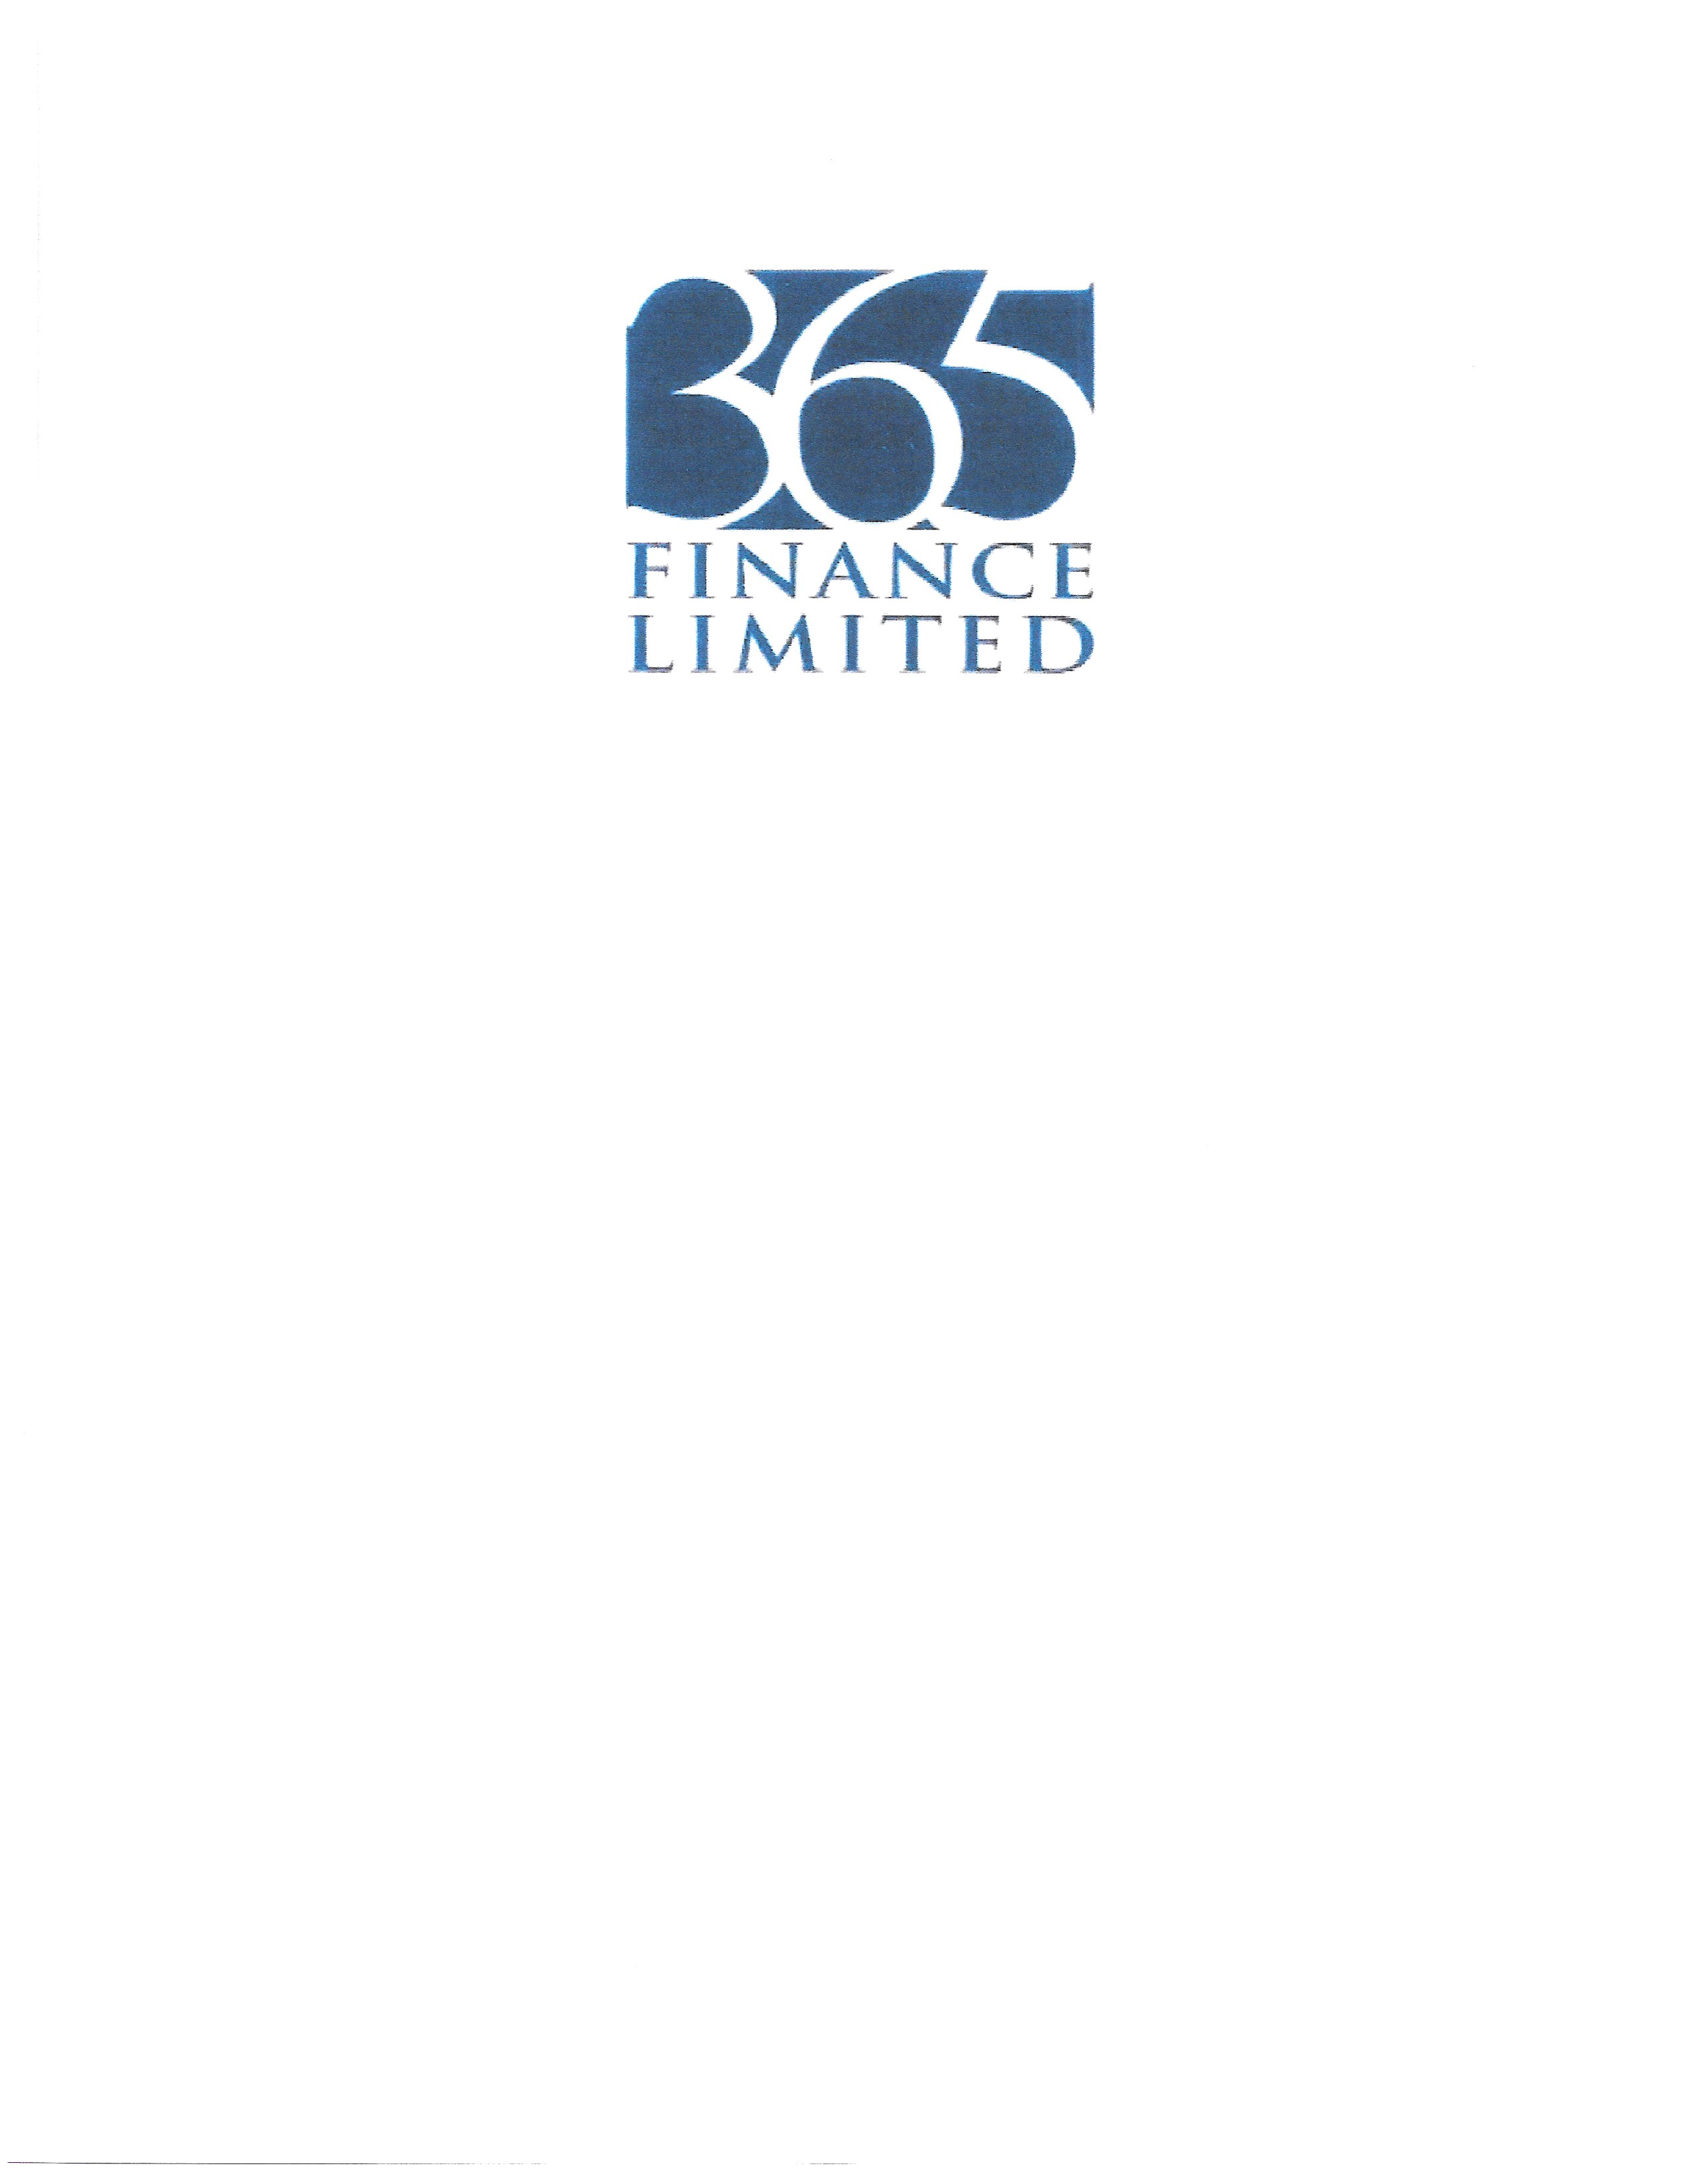 365 Finance Limited